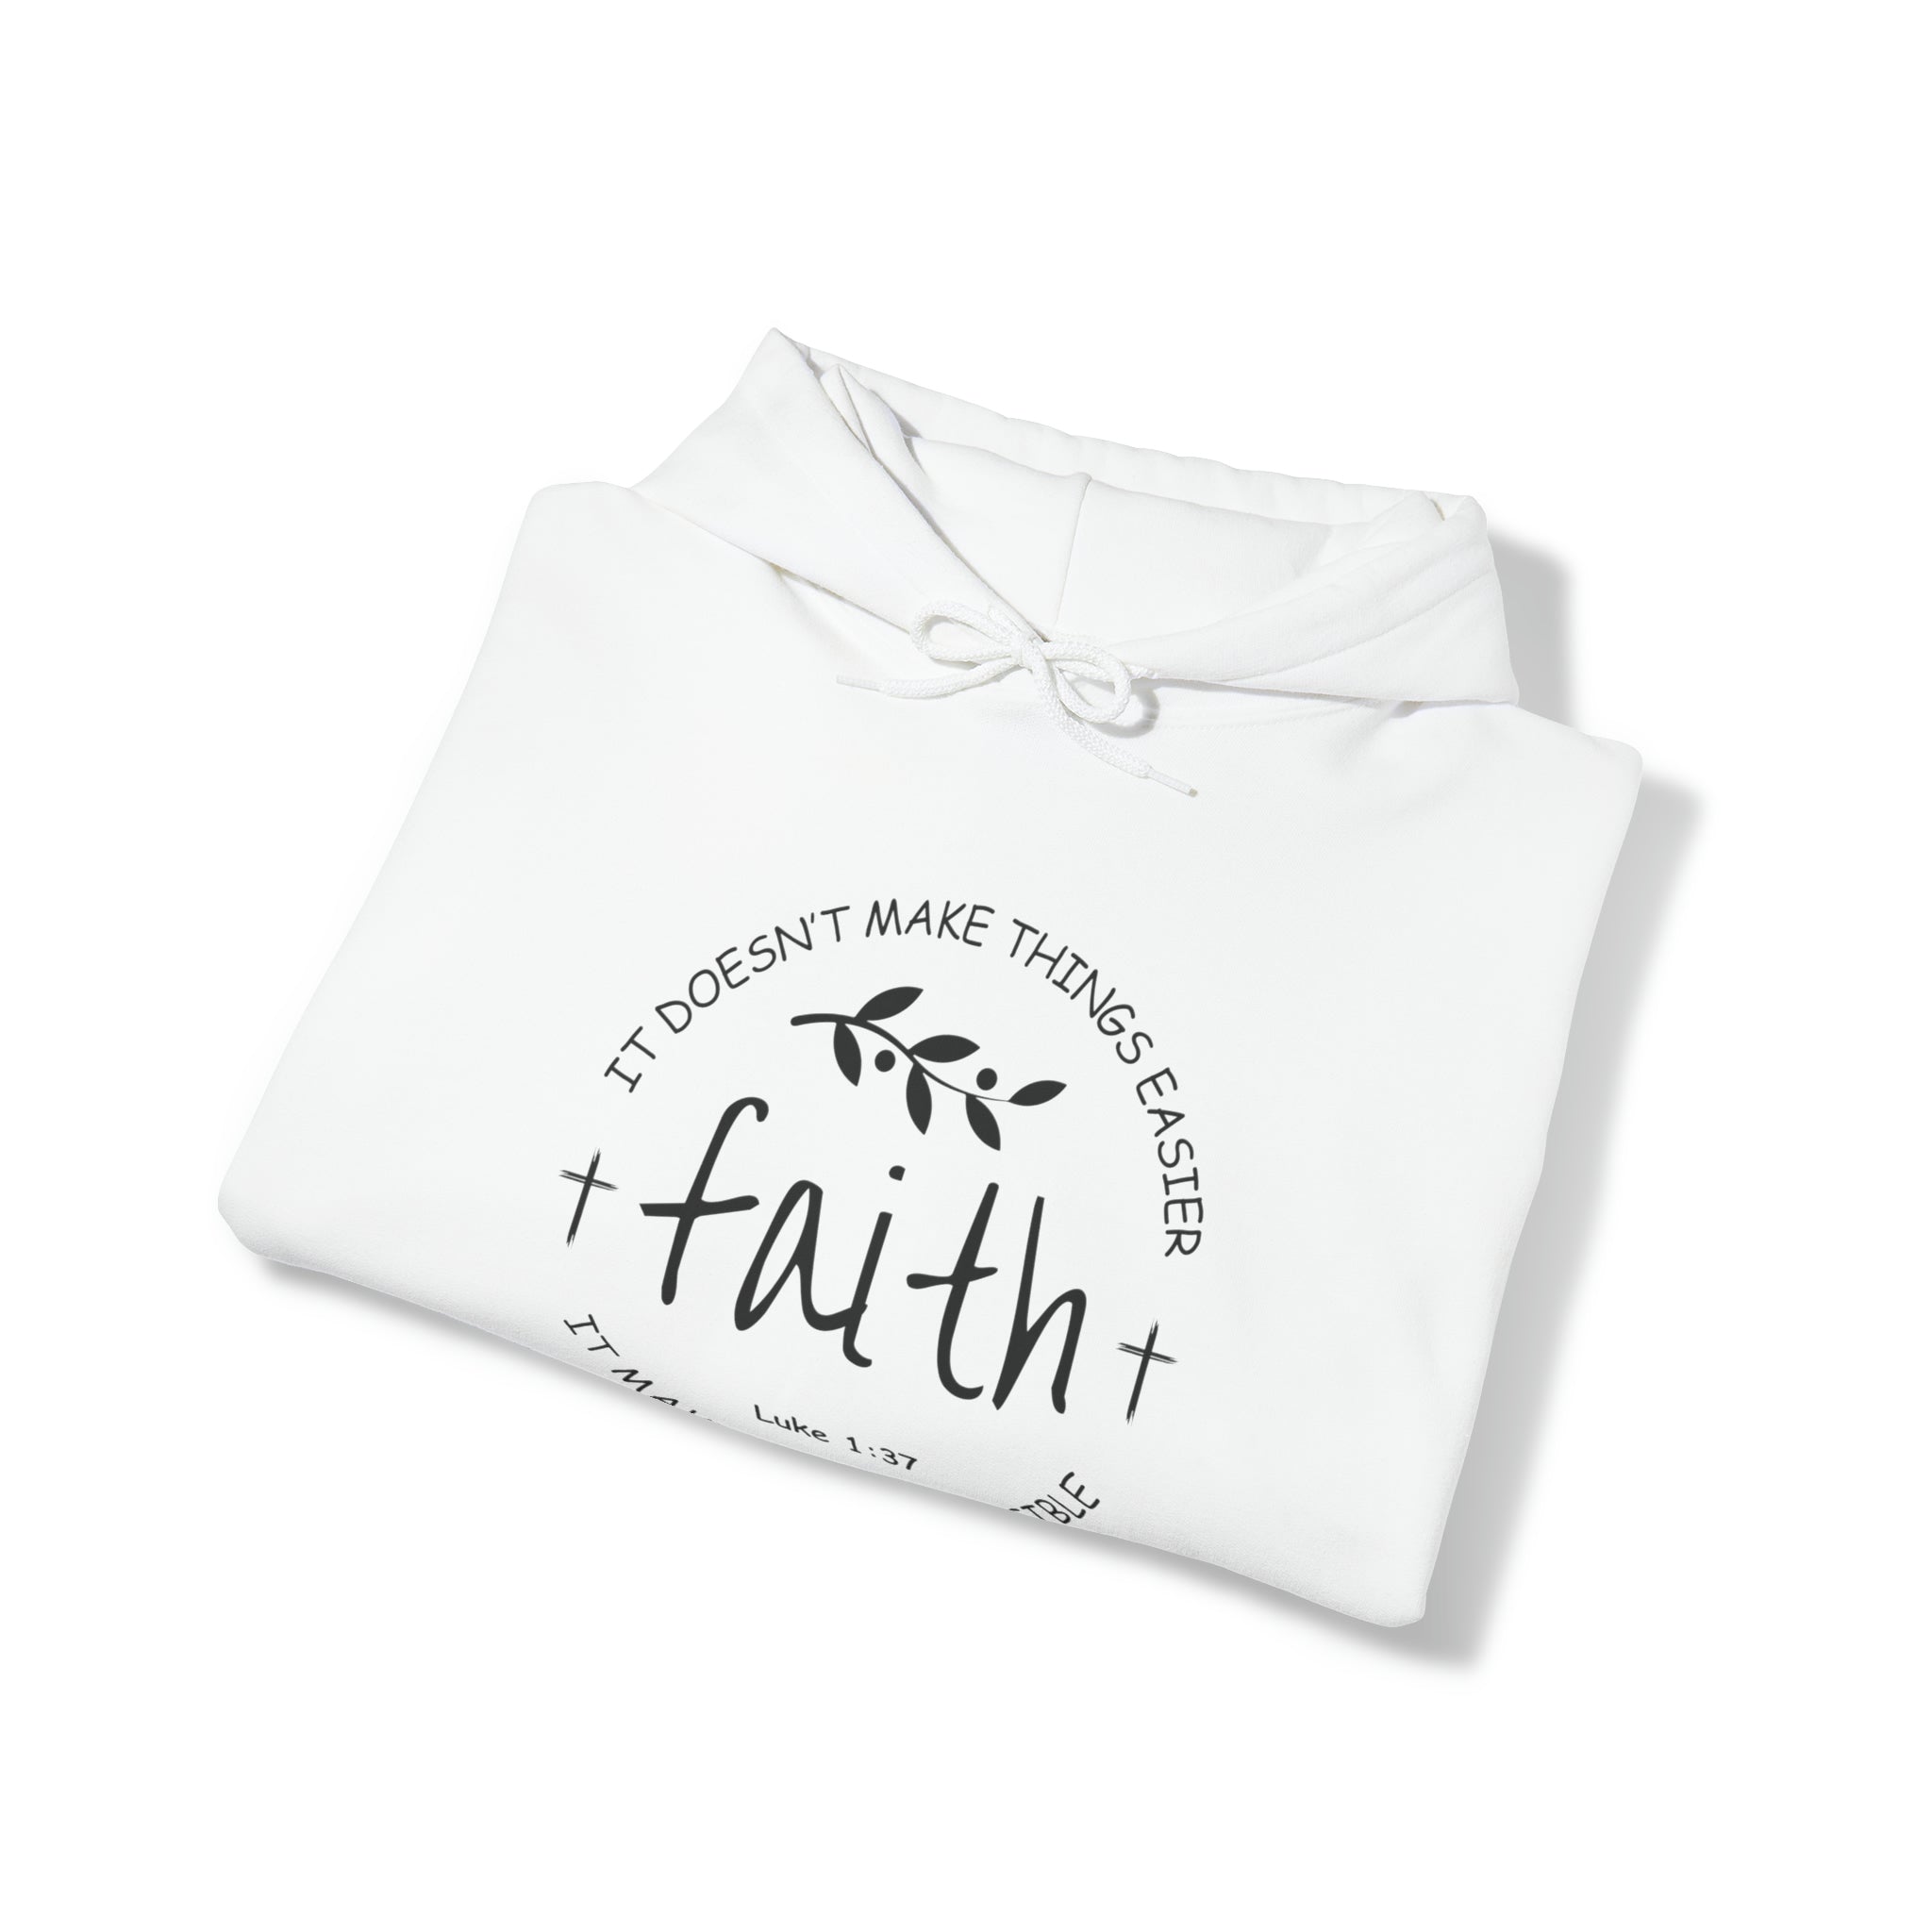 "Faith" Unisex Heavy Blend™ Hooded Sweatshirt